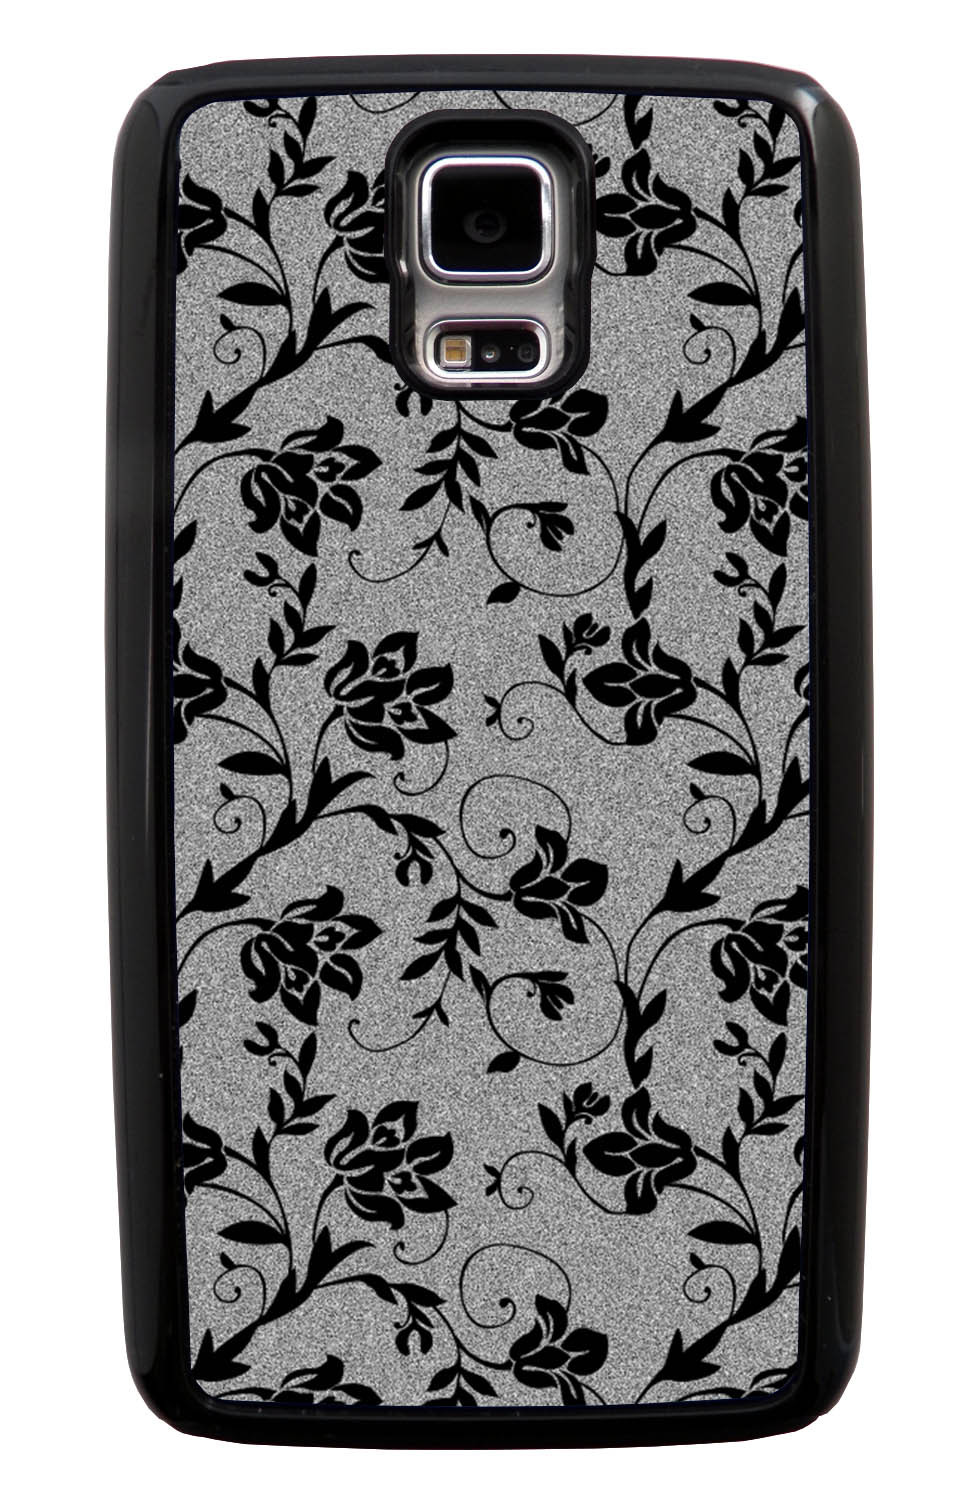 Samsung Galaxy S5 / SV Flower Case - Black on Textured Grey - Stencil Cutout - Black Tough Hybrid Case